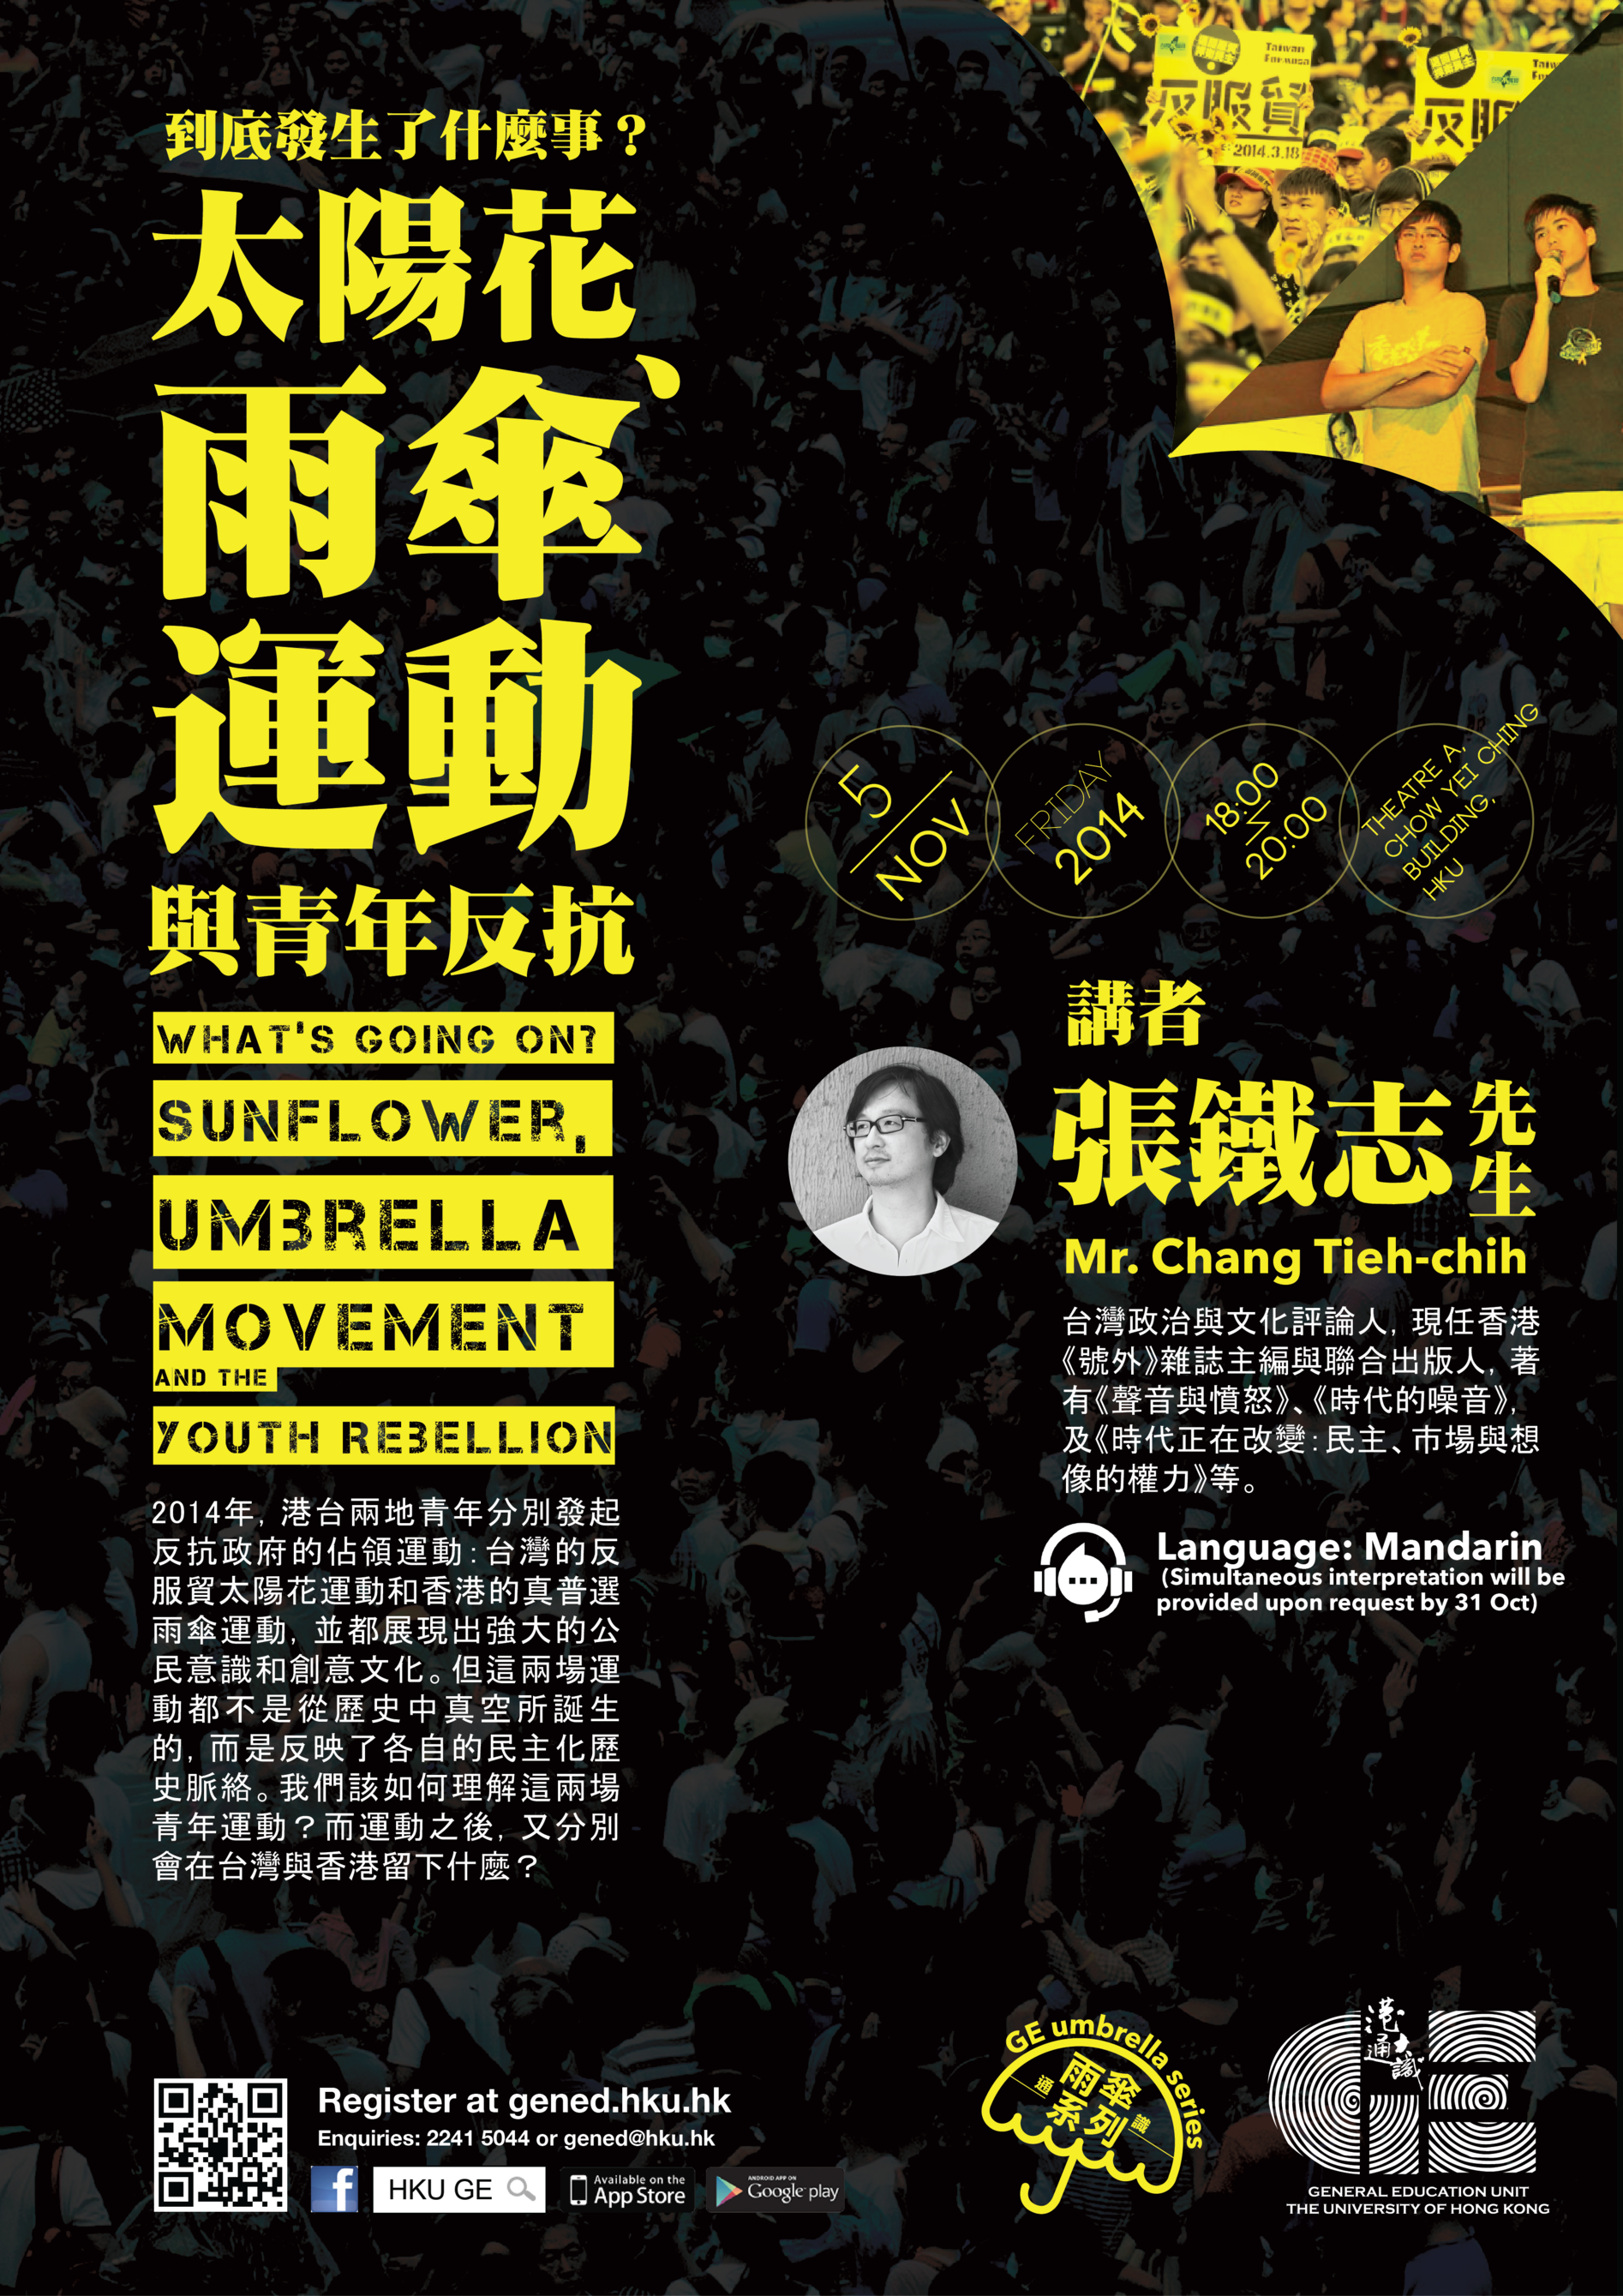 What's going on? Sunflower, Umbrella Movement and the Youth Rebellion  到底發生了什麼事？太陽花、雨傘運動與青年反抗